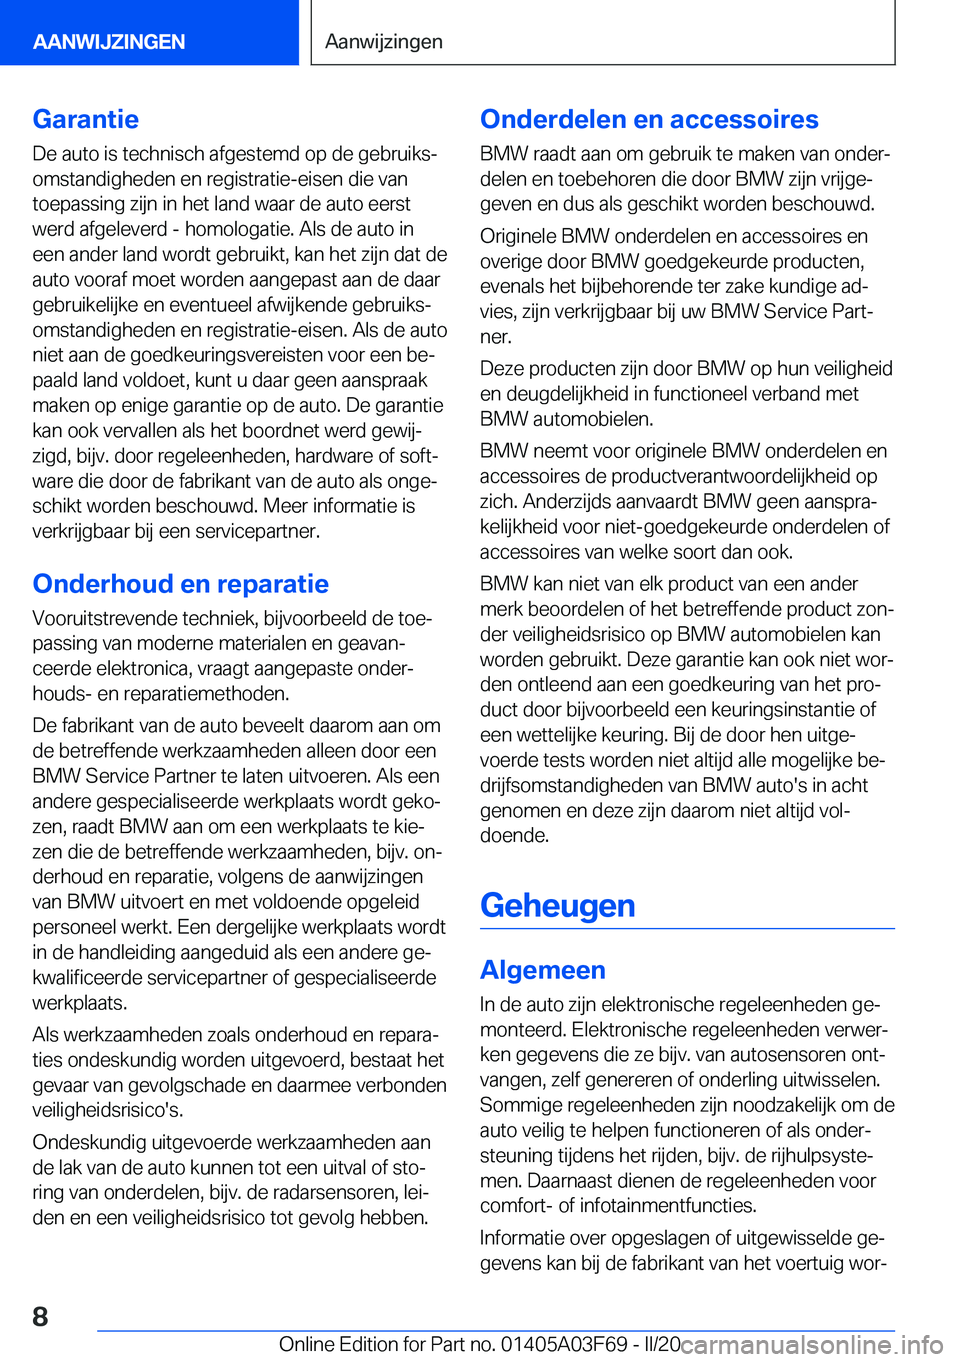 BMW 3 SERIES 2020  Instructieboekjes (in Dutch) �G�a�r�a�n�t�i�e�D�e��a�u�t�o��i�s��t�e�c�h�n�i�s�c�h��a�f�g�e�s�t�e�m�d��o�p��d�e��g�e�b�r�u�i�k�sj
�o�m�s�t�a�n�d�i�g�h�e�d�e�n��e�n��r�e�g�i�s�t�r�a�t�i�e�-�e�i�s�e�n��d�i�e��v�a�n �t�o